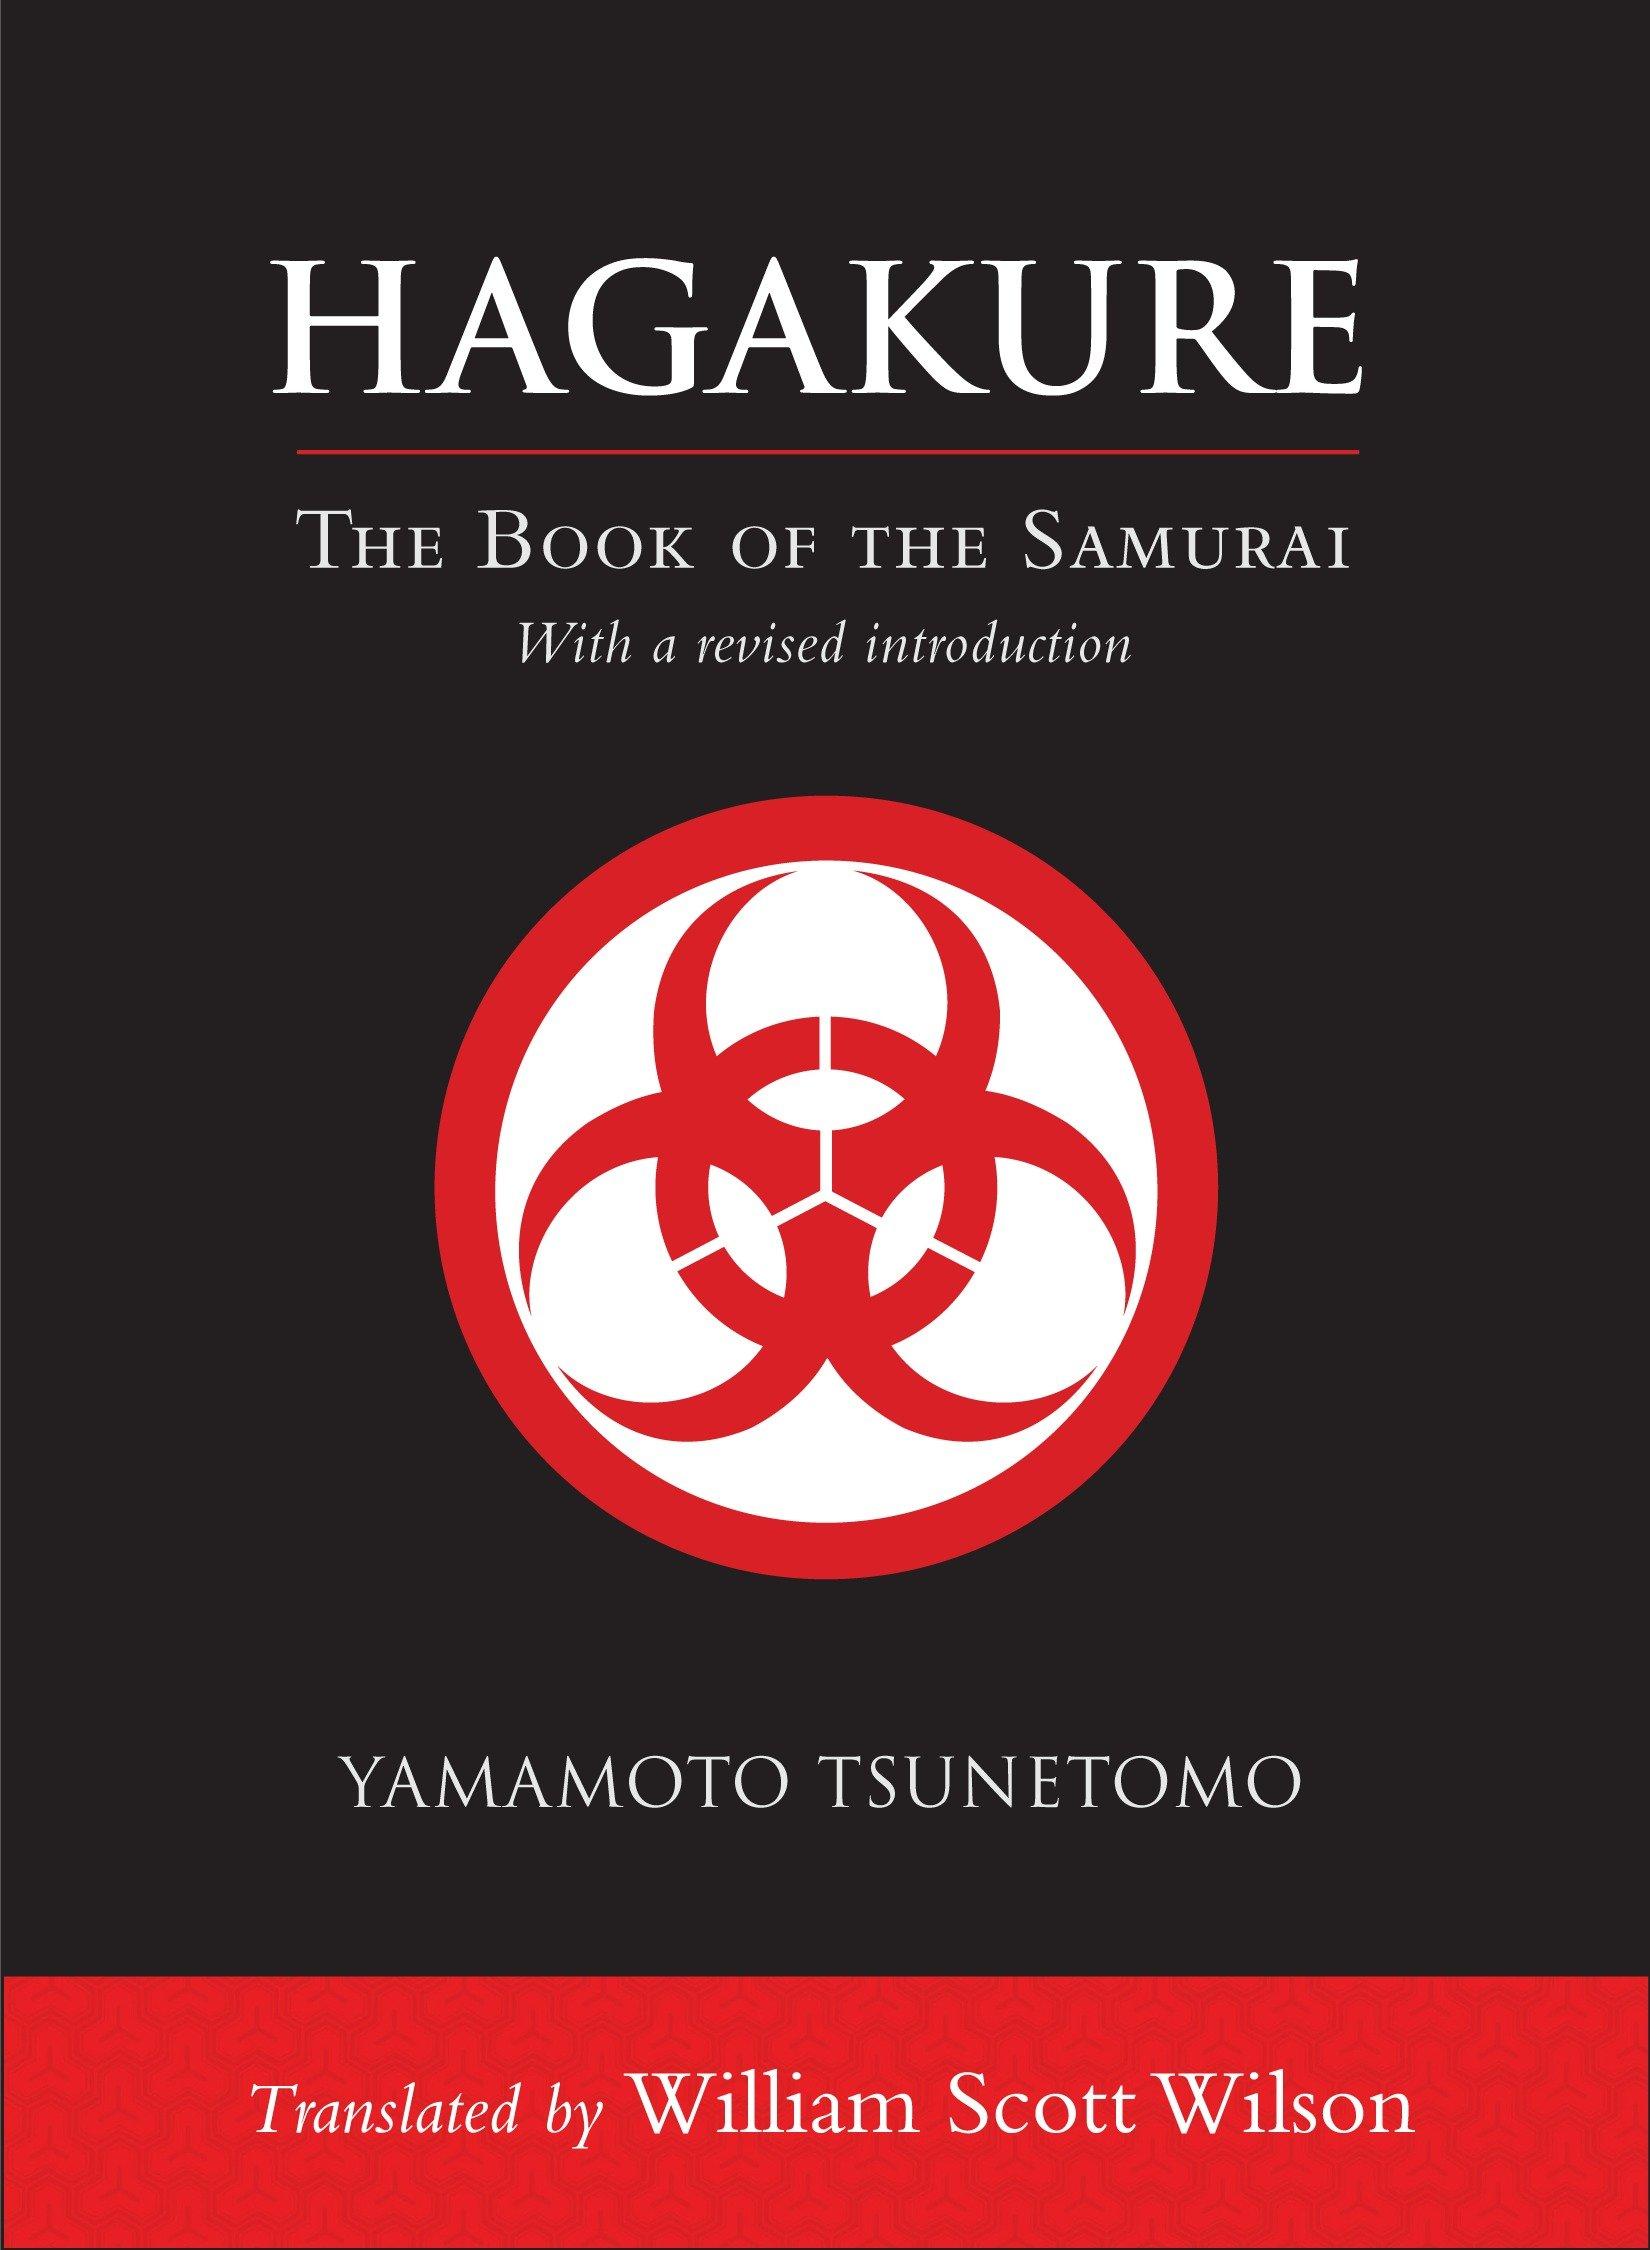 Hagakure: The Book of the Samurai / The Book of the Samurai / Yamamoto Tsunetomo / Buch / Einband - fest (Hardcover) / Englisch / 2012 / SHAMBHALA / EAN 9781590309858 - Tsunetomo, Yamamoto